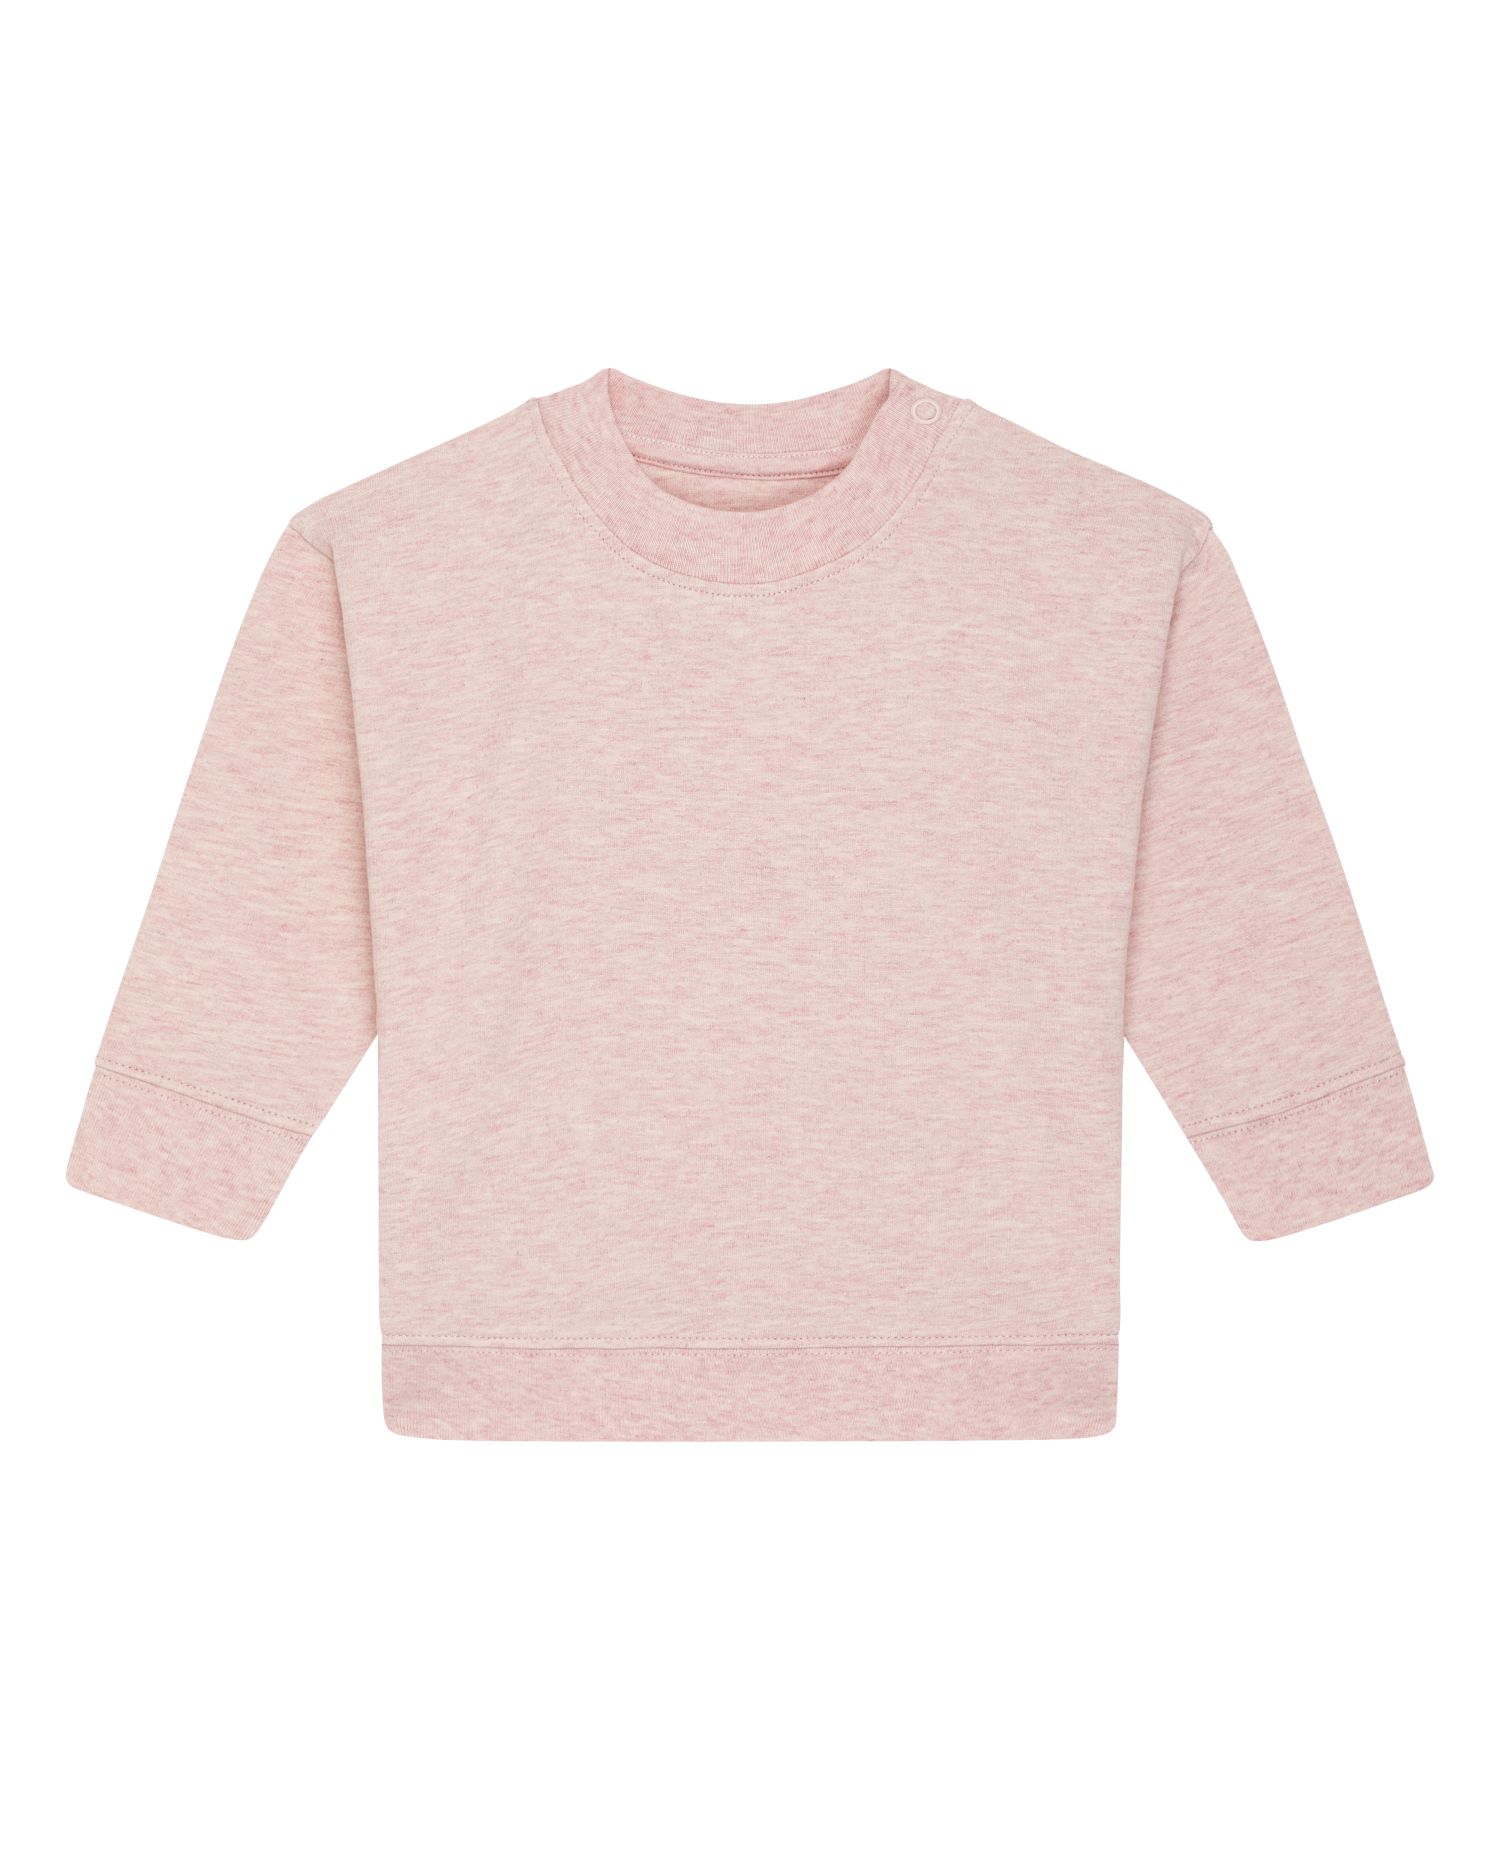 Crew neck sweatshirts Baby Changer in Farbe Cream Heather Pink